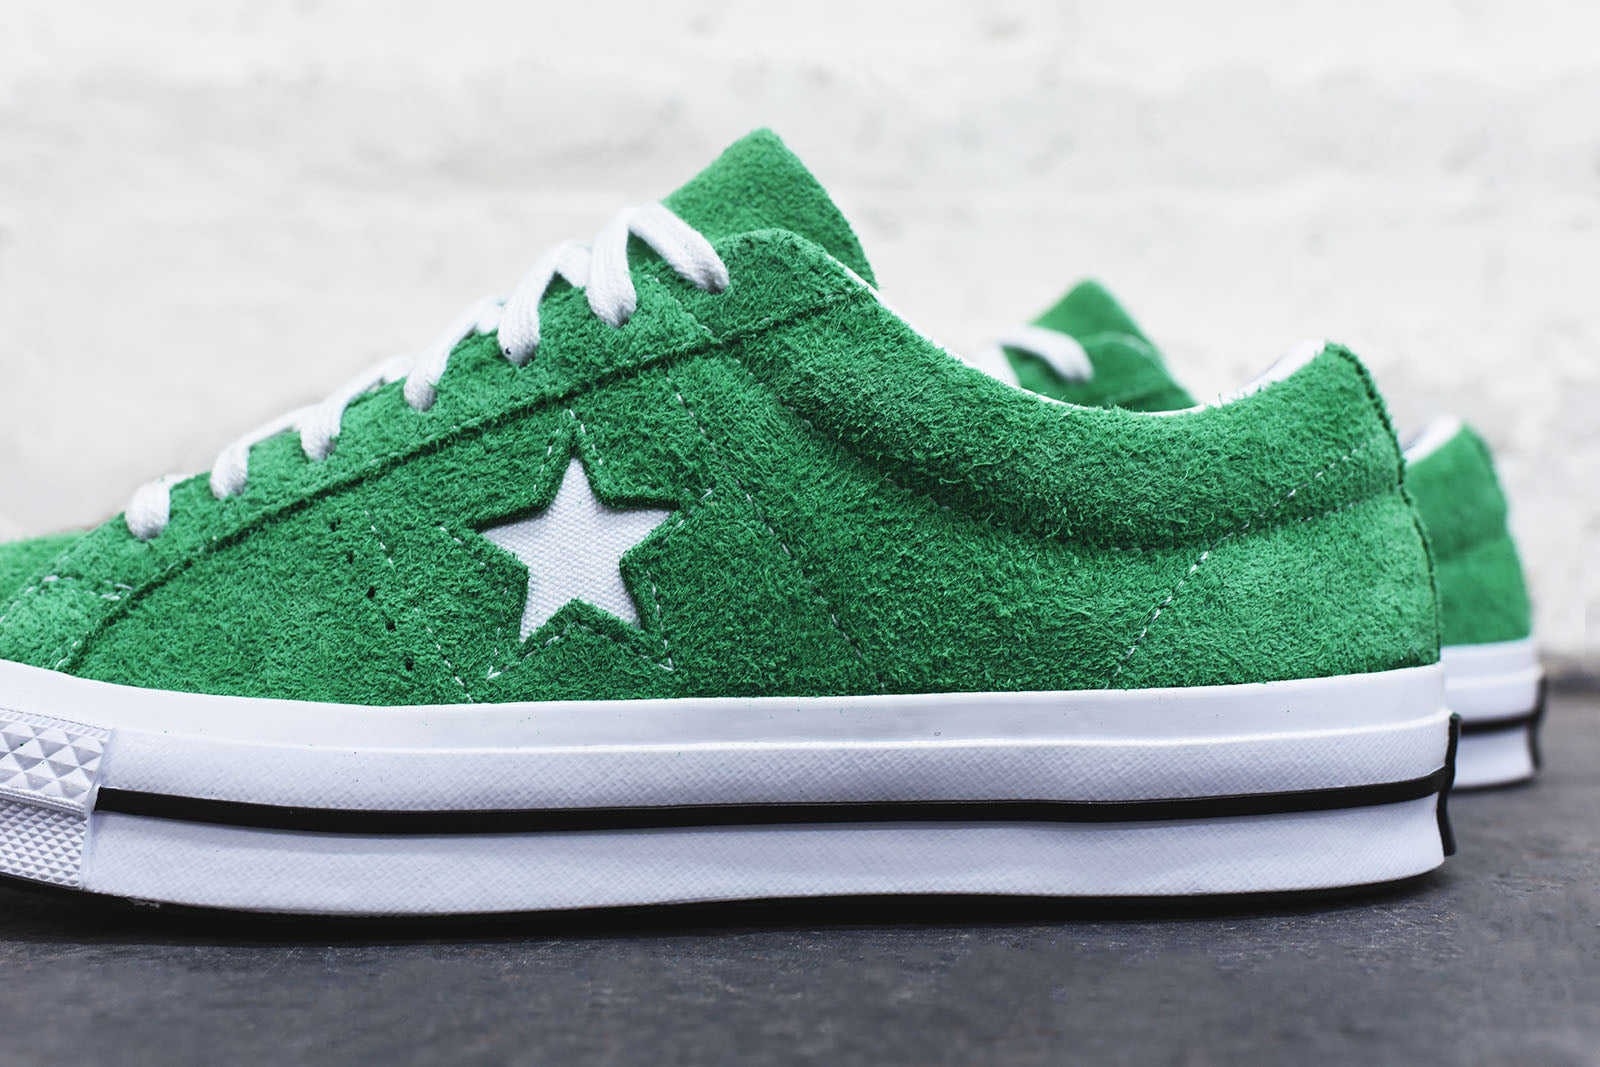 converse one star green